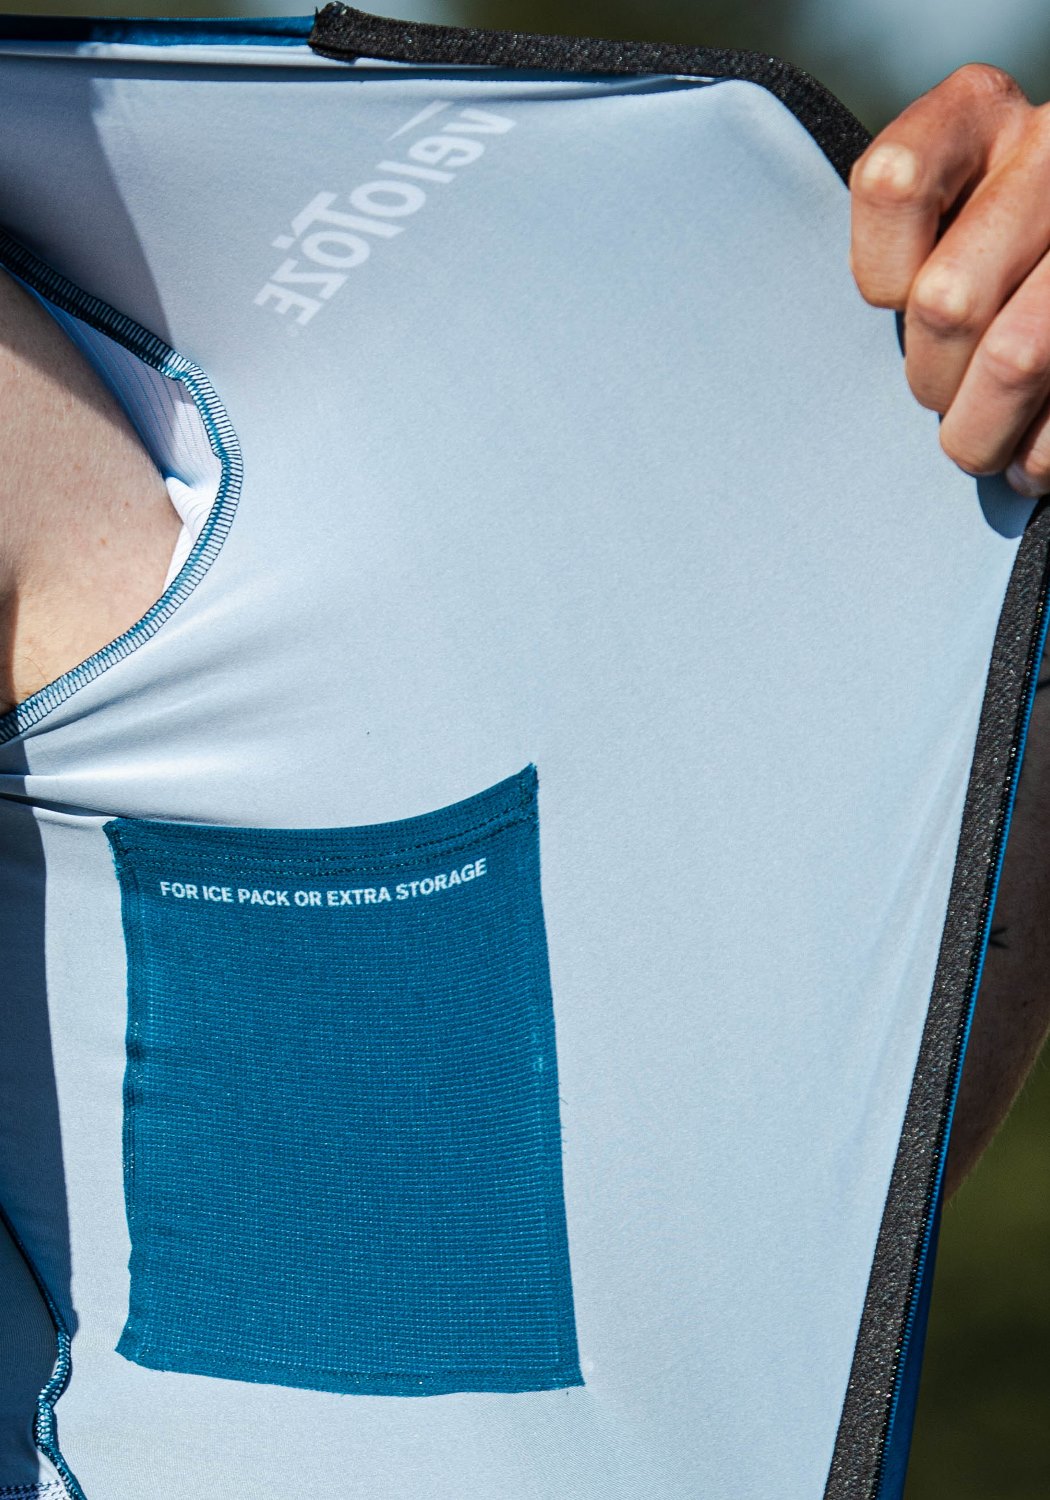 veloToze AeroLink™ Short Sleeves Jersey - Blue/Aqua